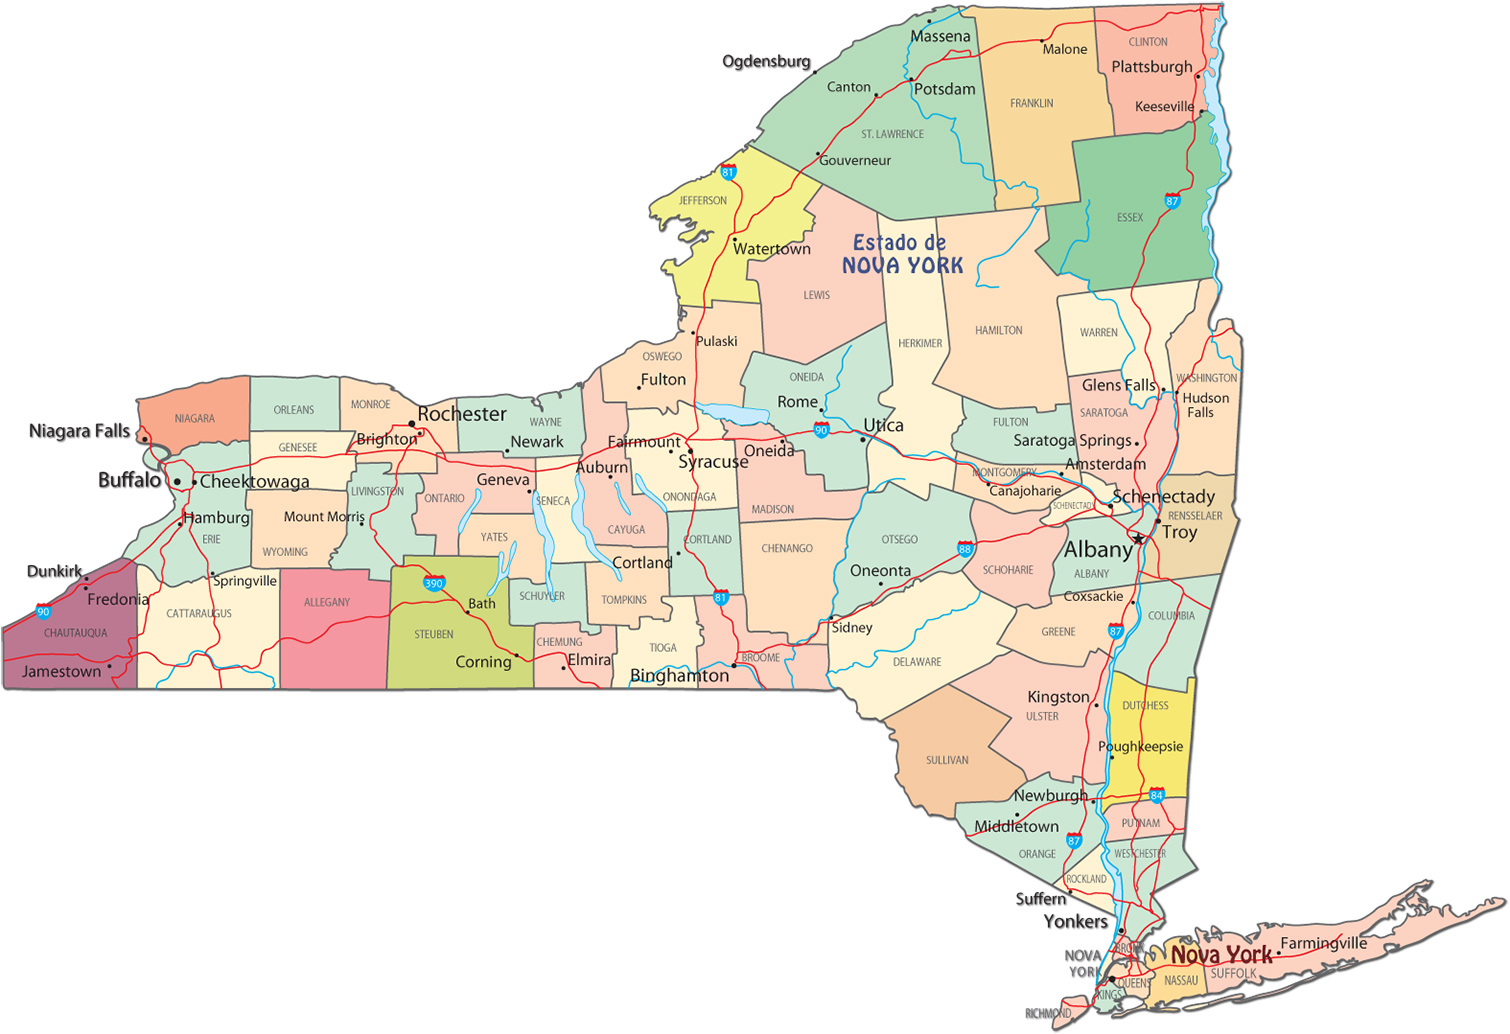 Mapa Nova York